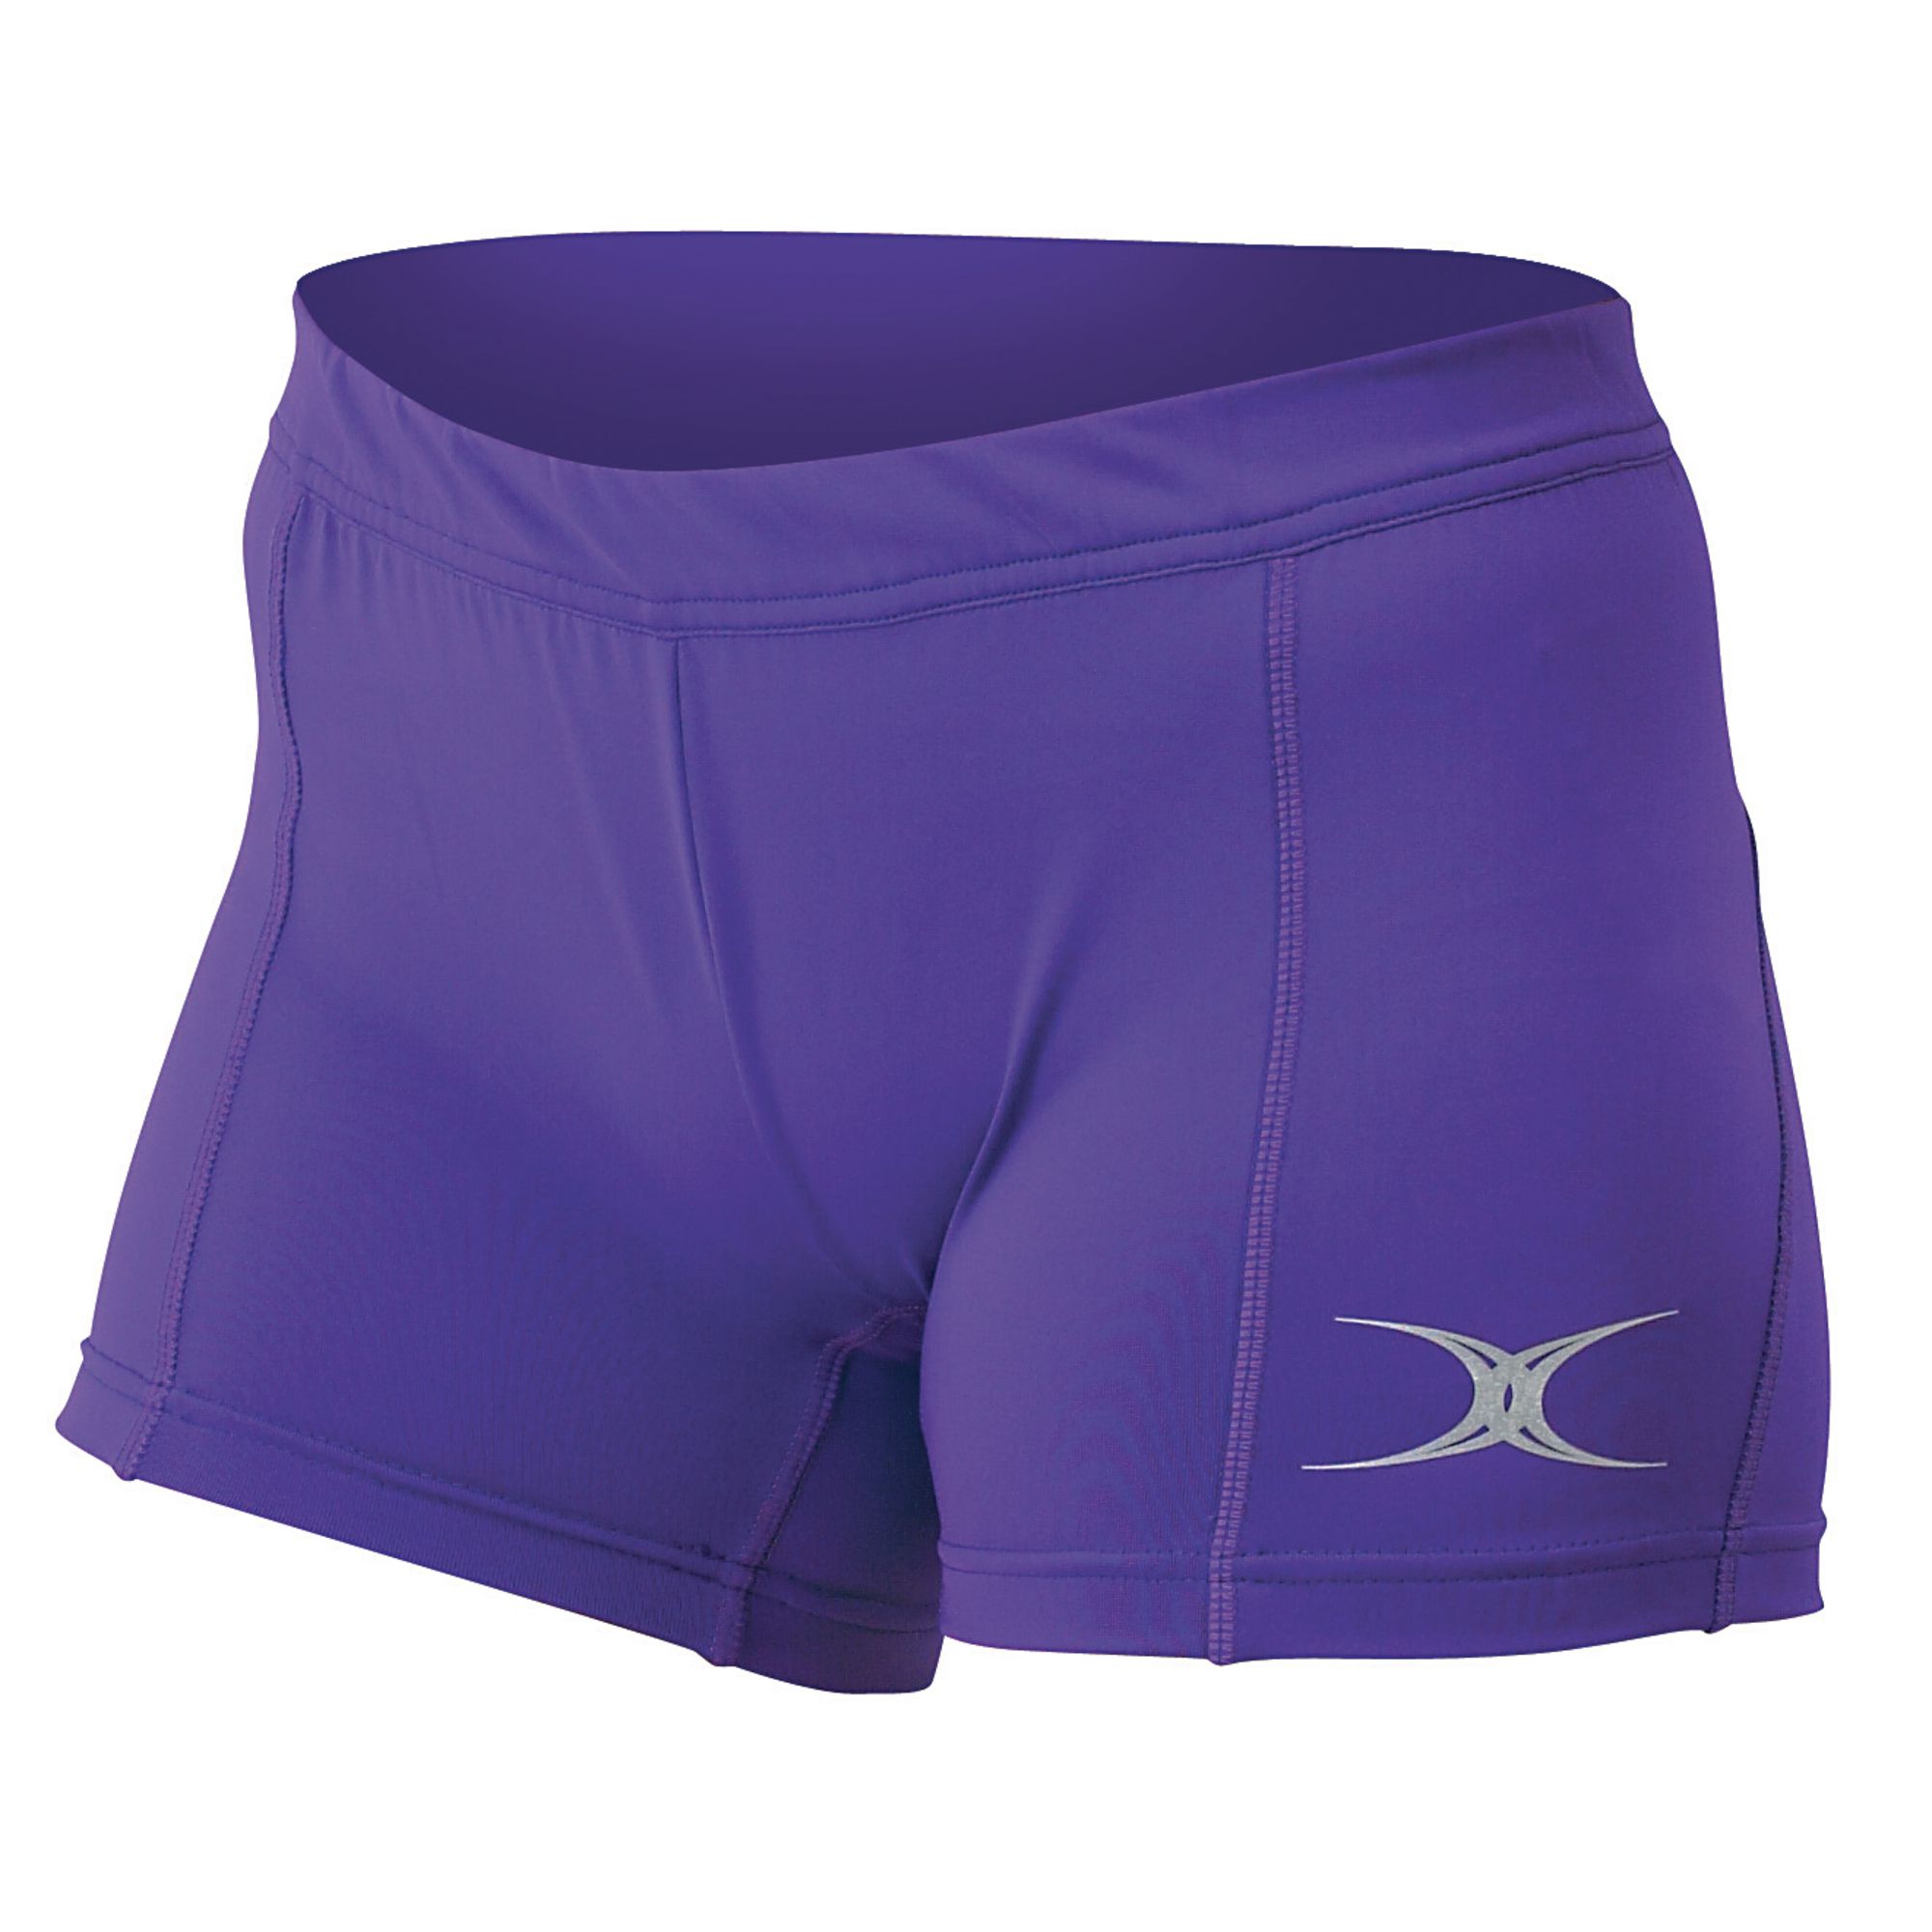 Gilbert Eclipse Nball Shorts S10 Purple